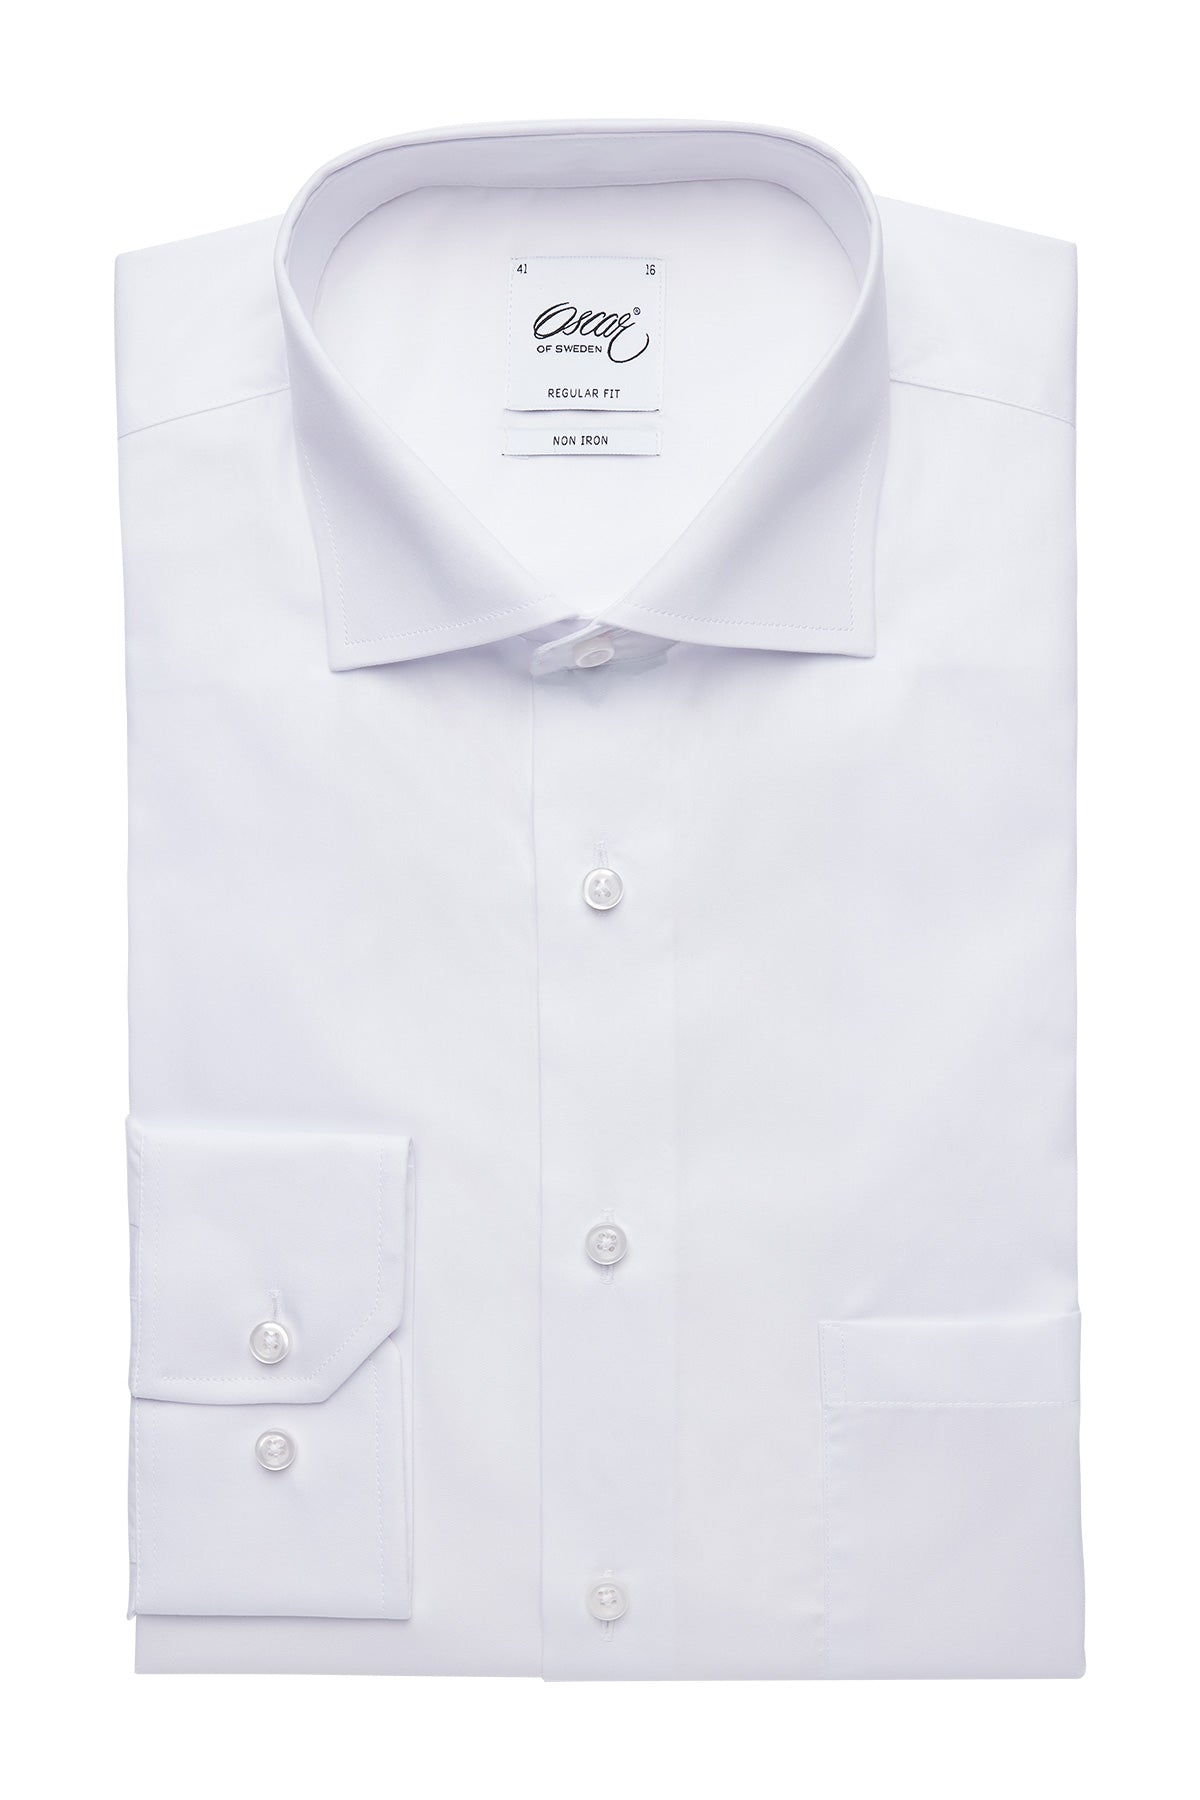 White regular fit shirt